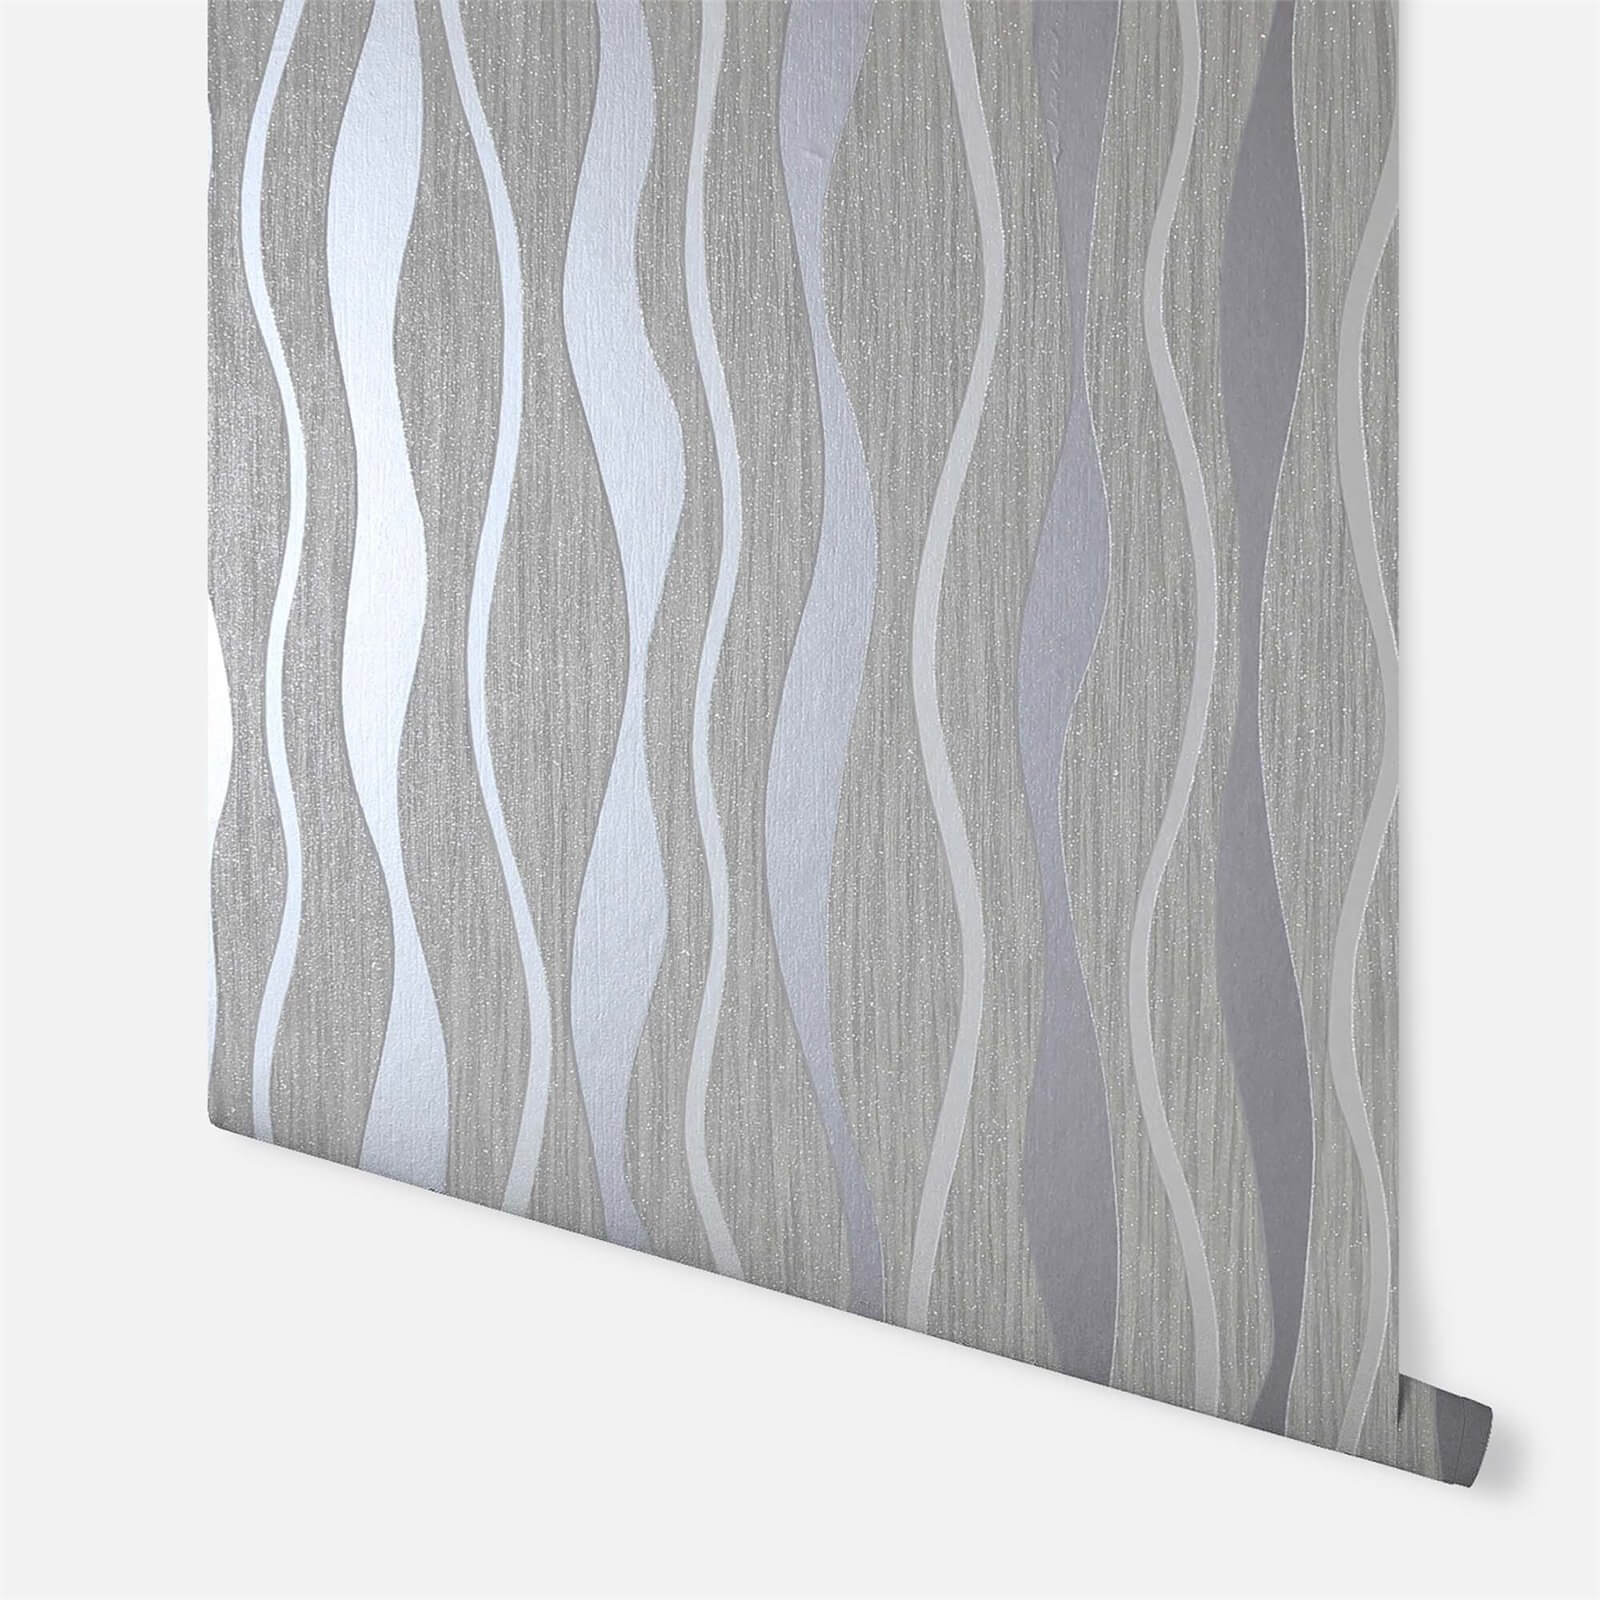 Arthouse Metallic Wave Grey Wallpaper